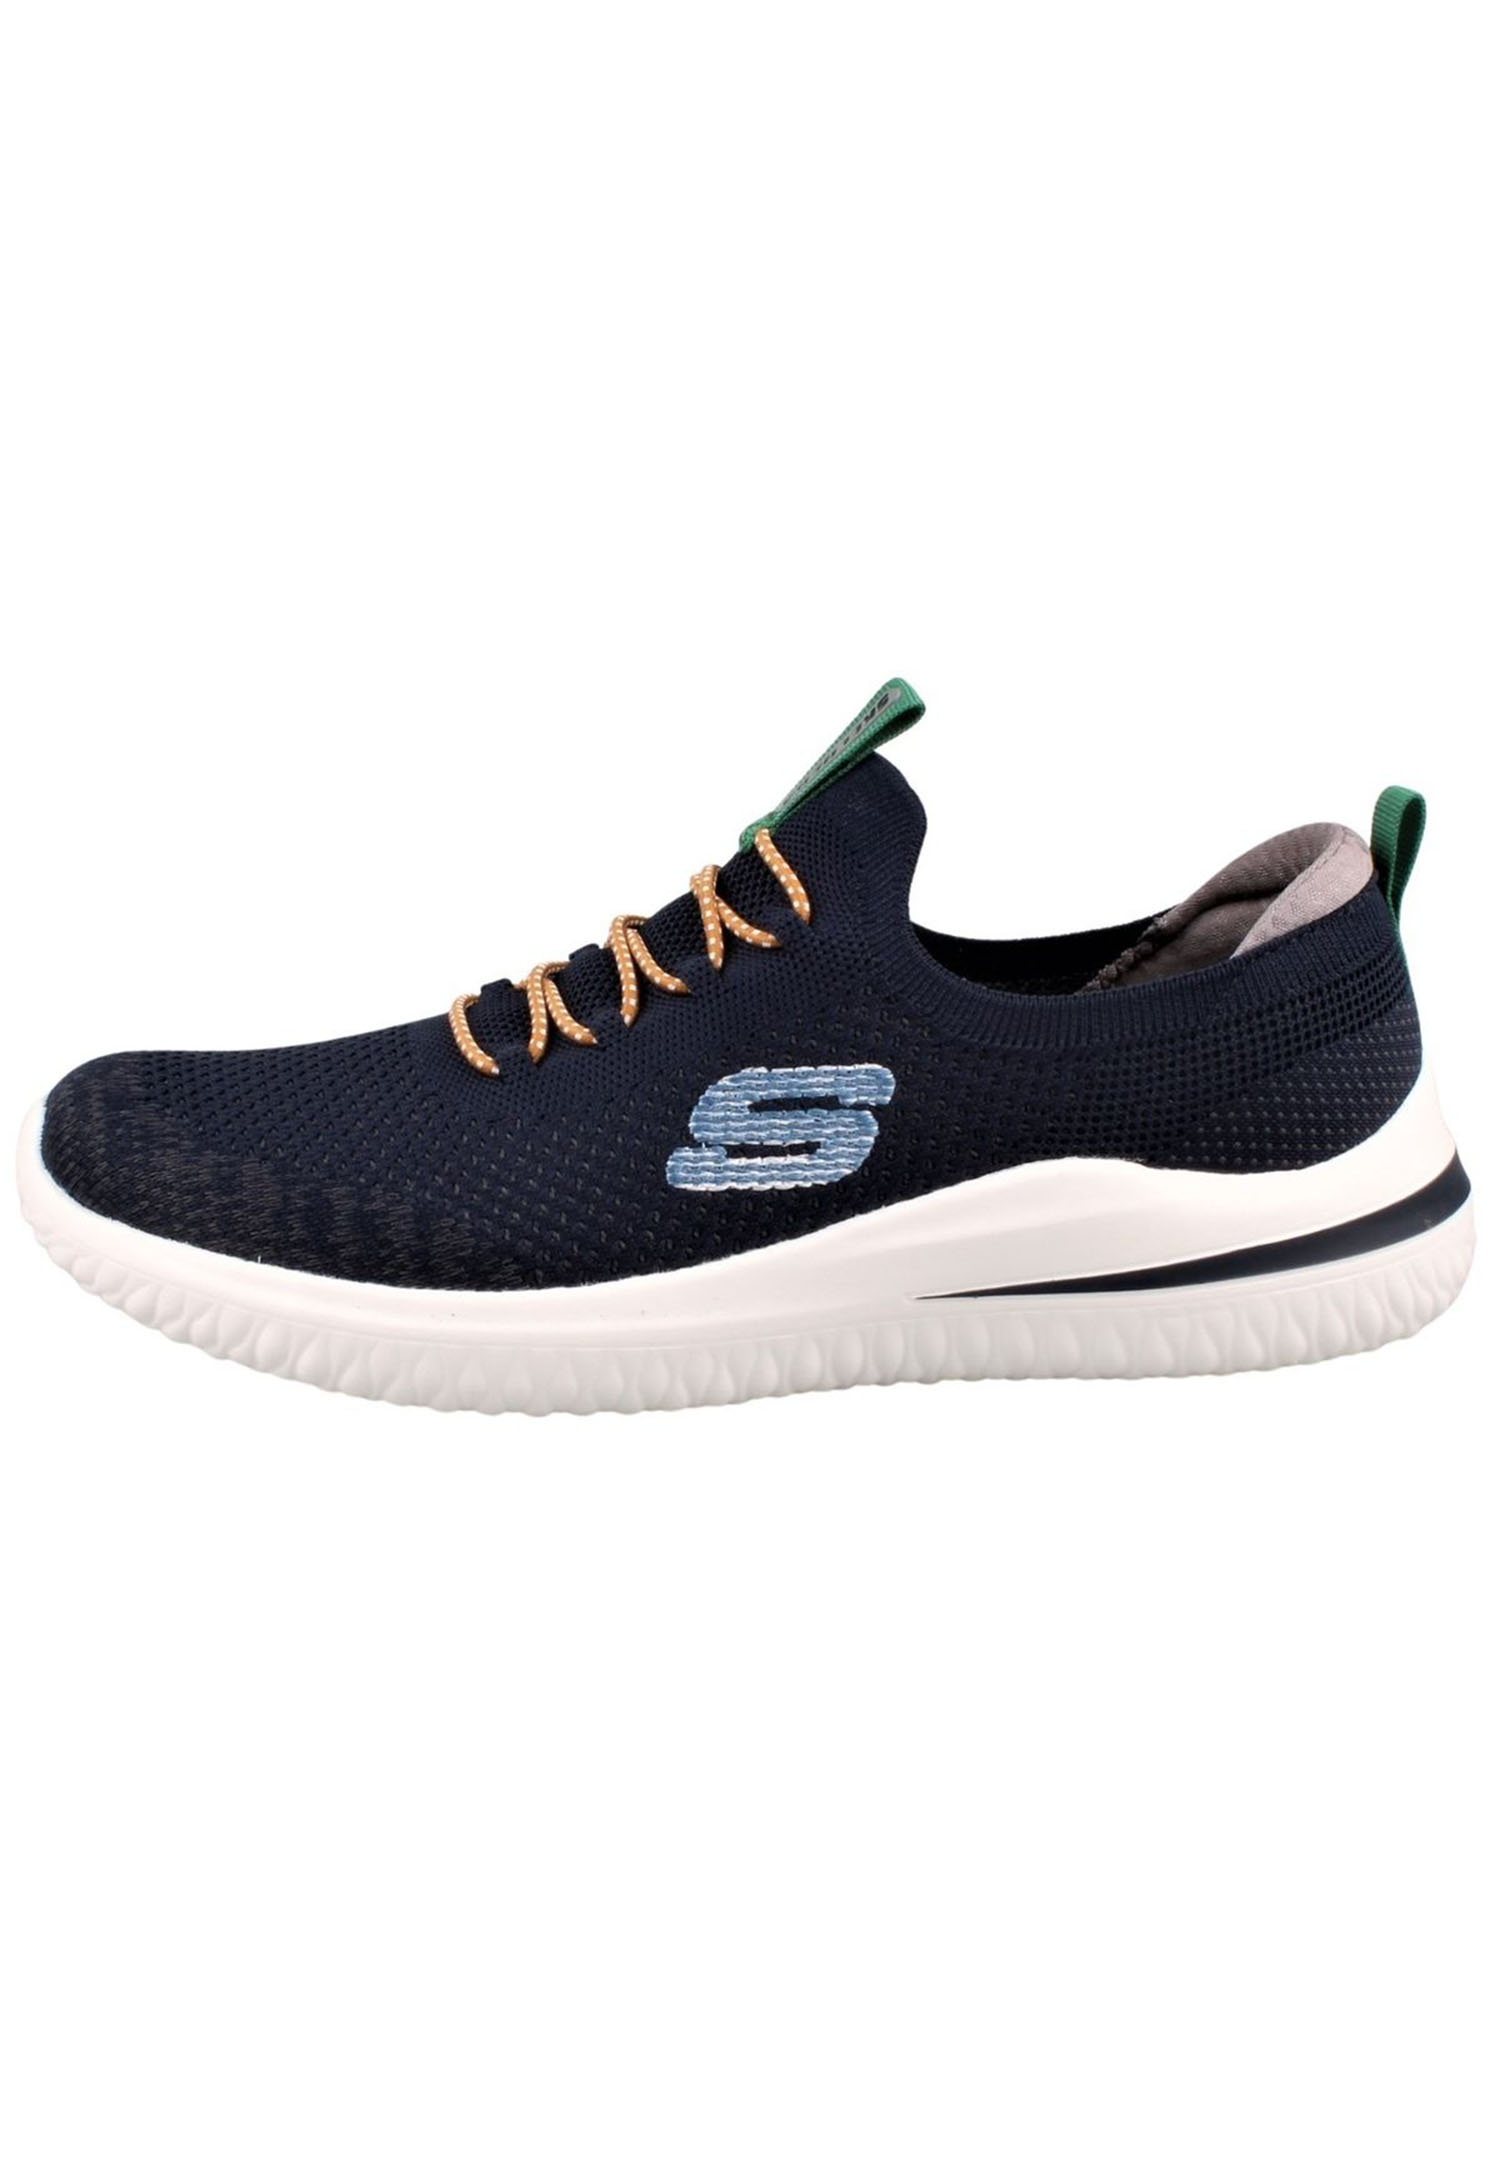 Низкие кроссовки Skechers Low Delson 3.0 Mendon, синий